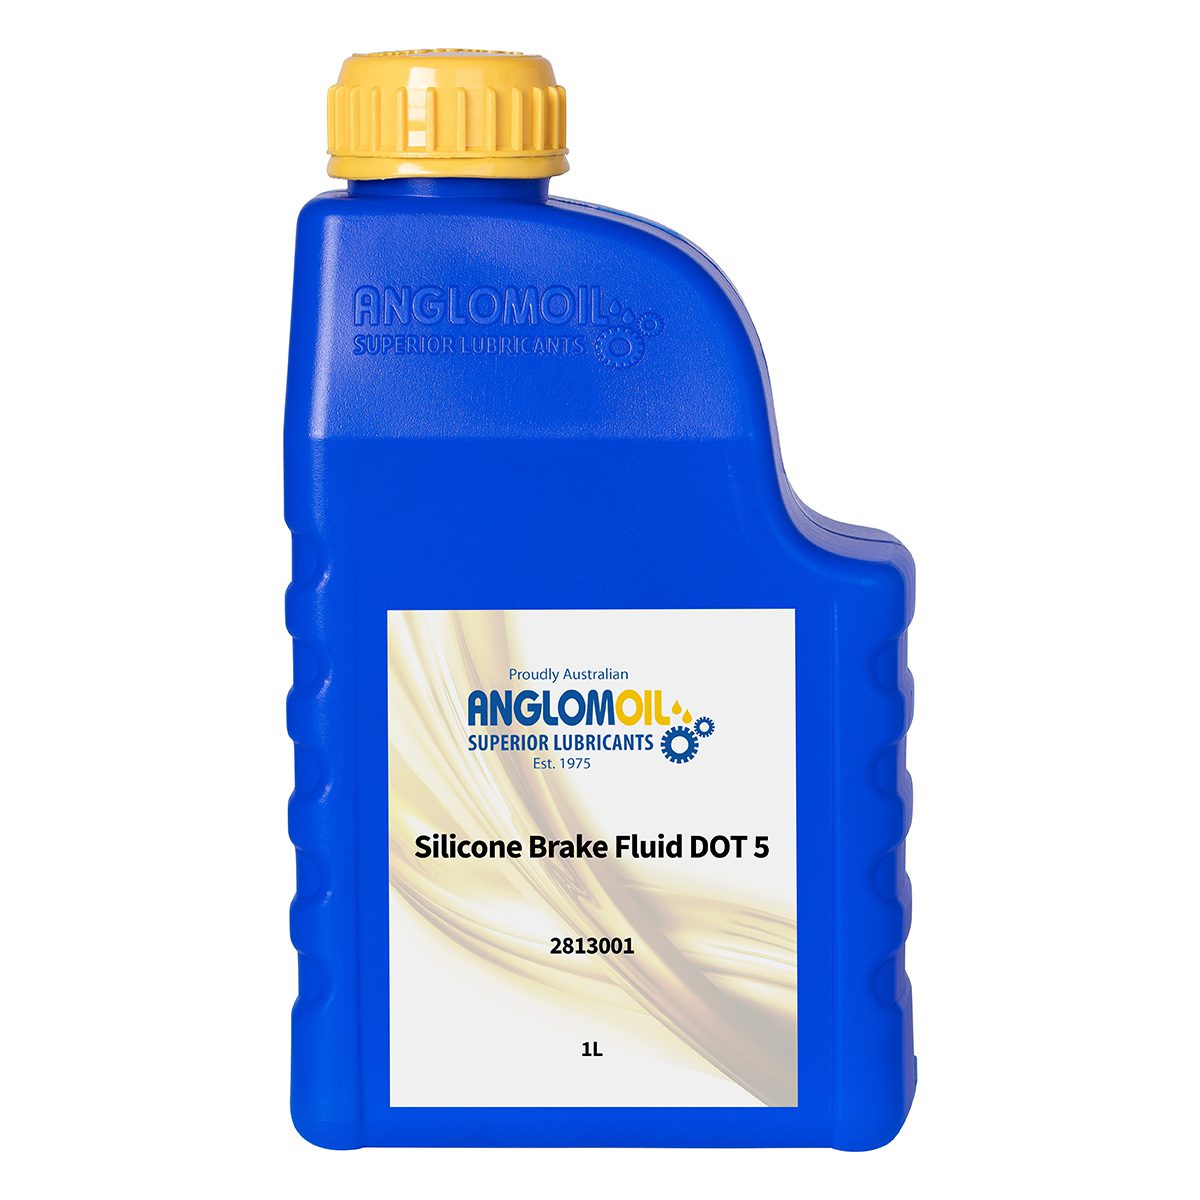 Silicone Brake Fluid DOT 5